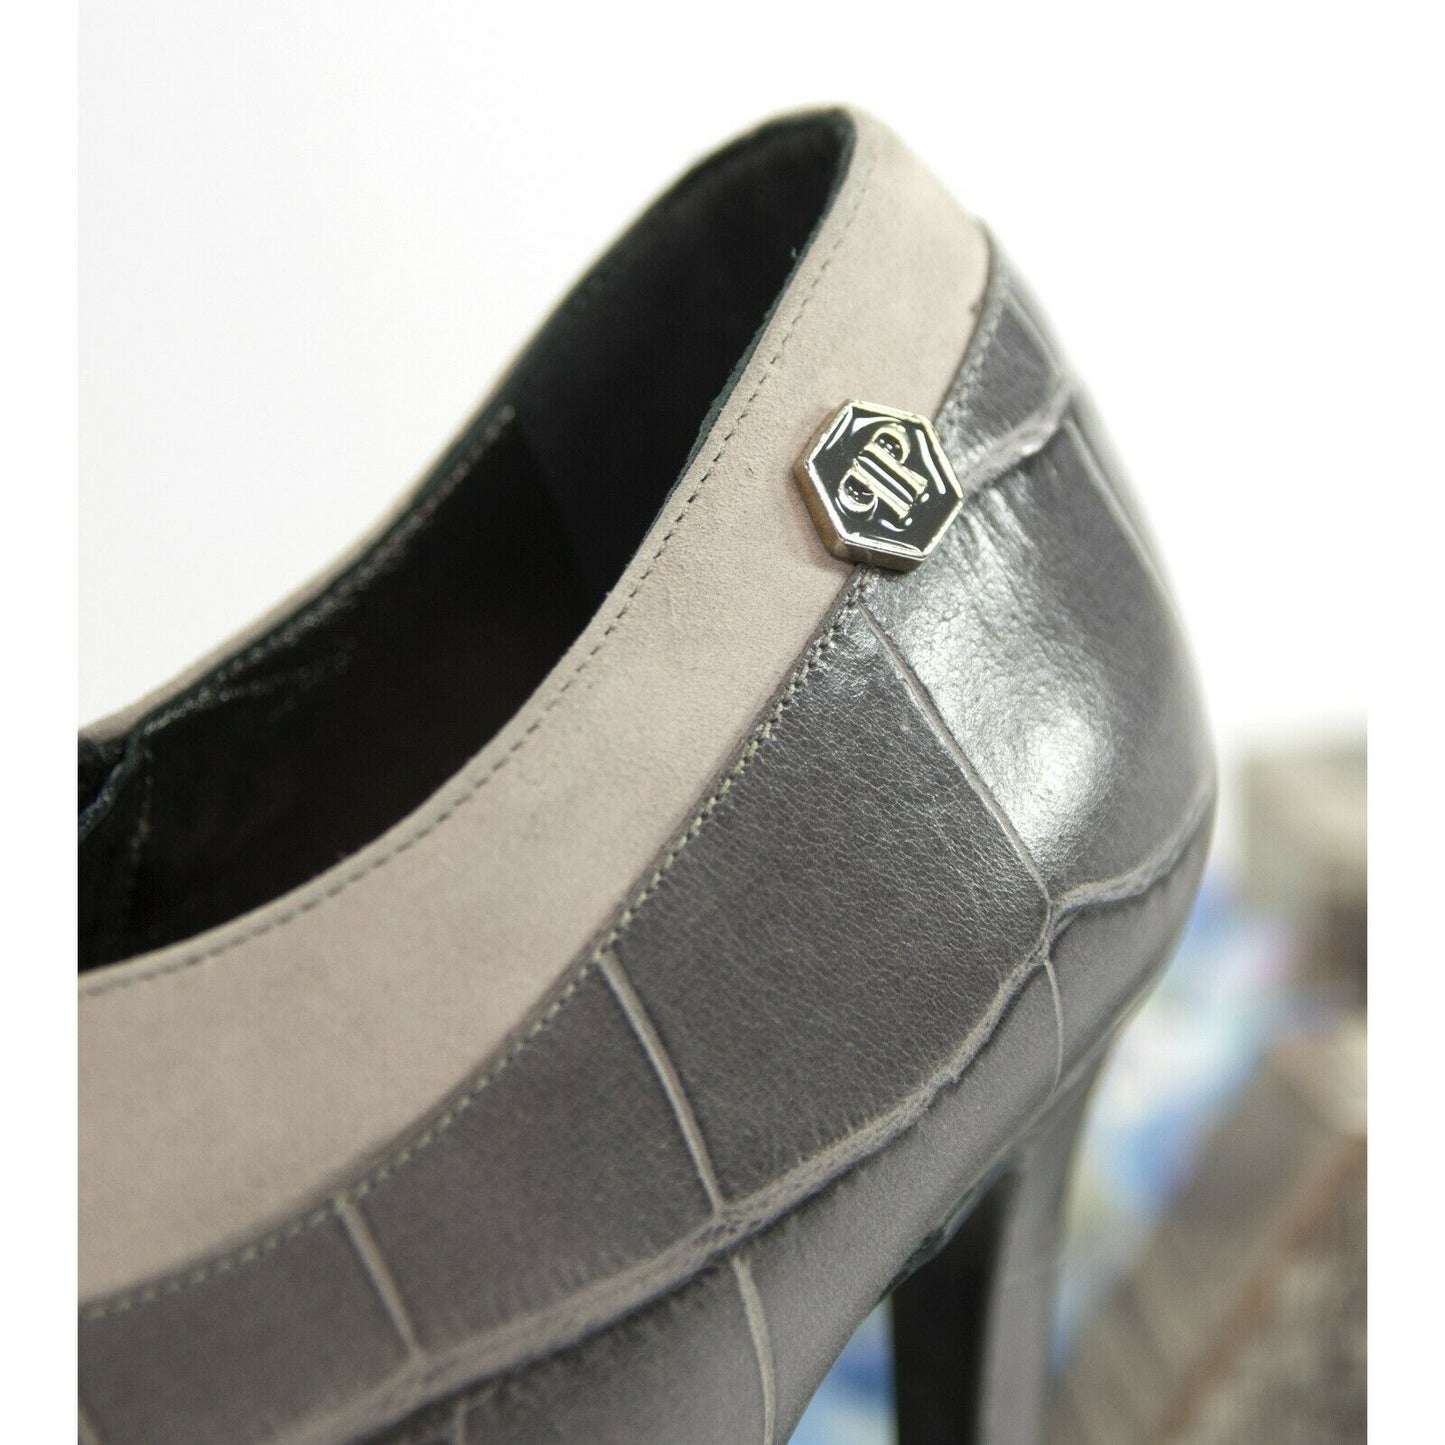 Philipp Plein Limited Edition Grey Reptilia Croc Leather Bootie Heels 39.5 NIB